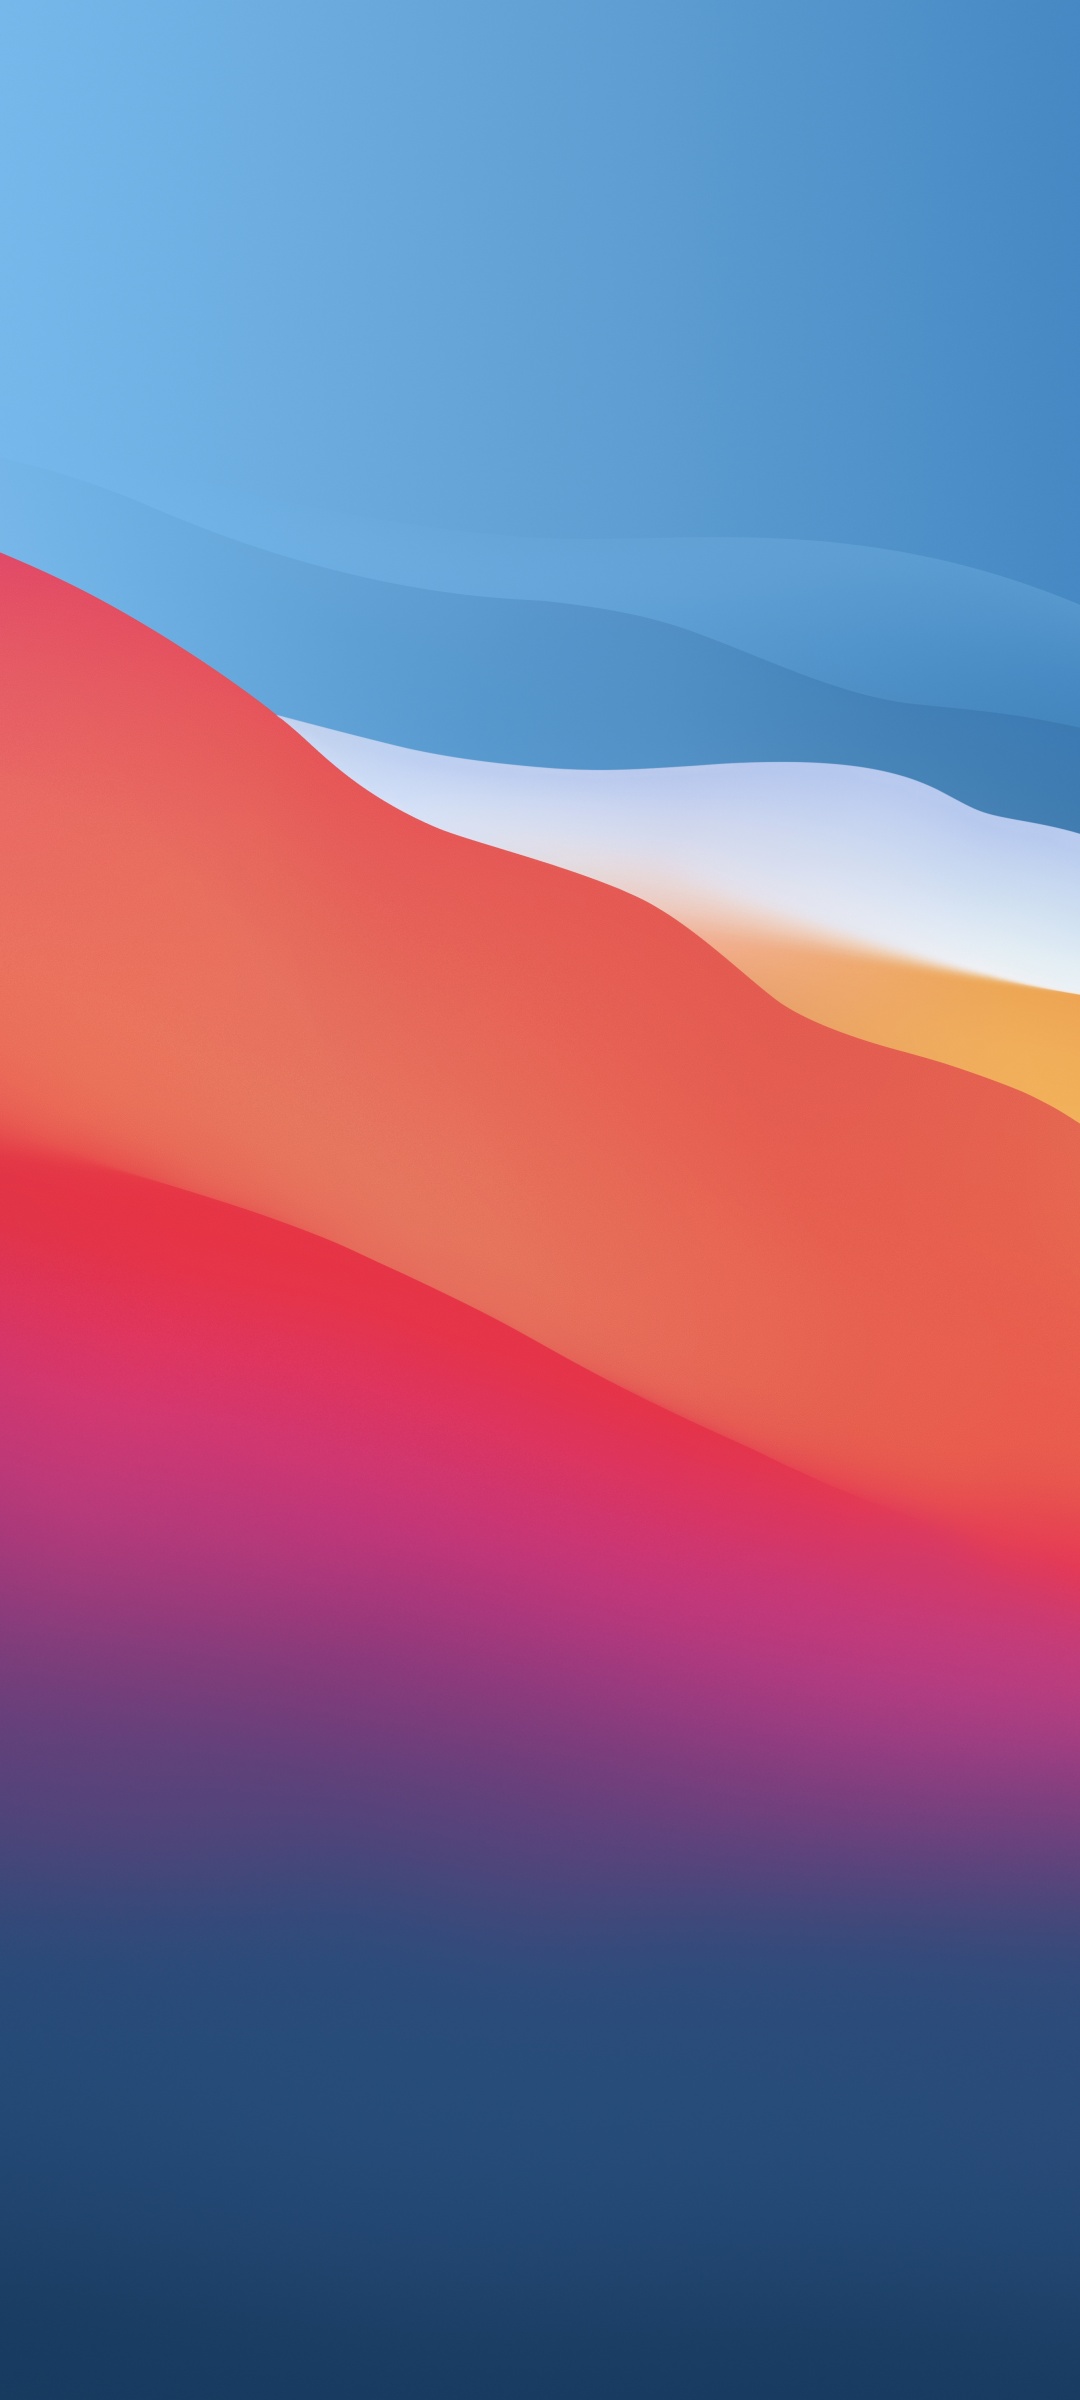 macOS Big Sur 4K Wallpaper, Colorful, Waves, Smooth, Stock, Apple, 5K